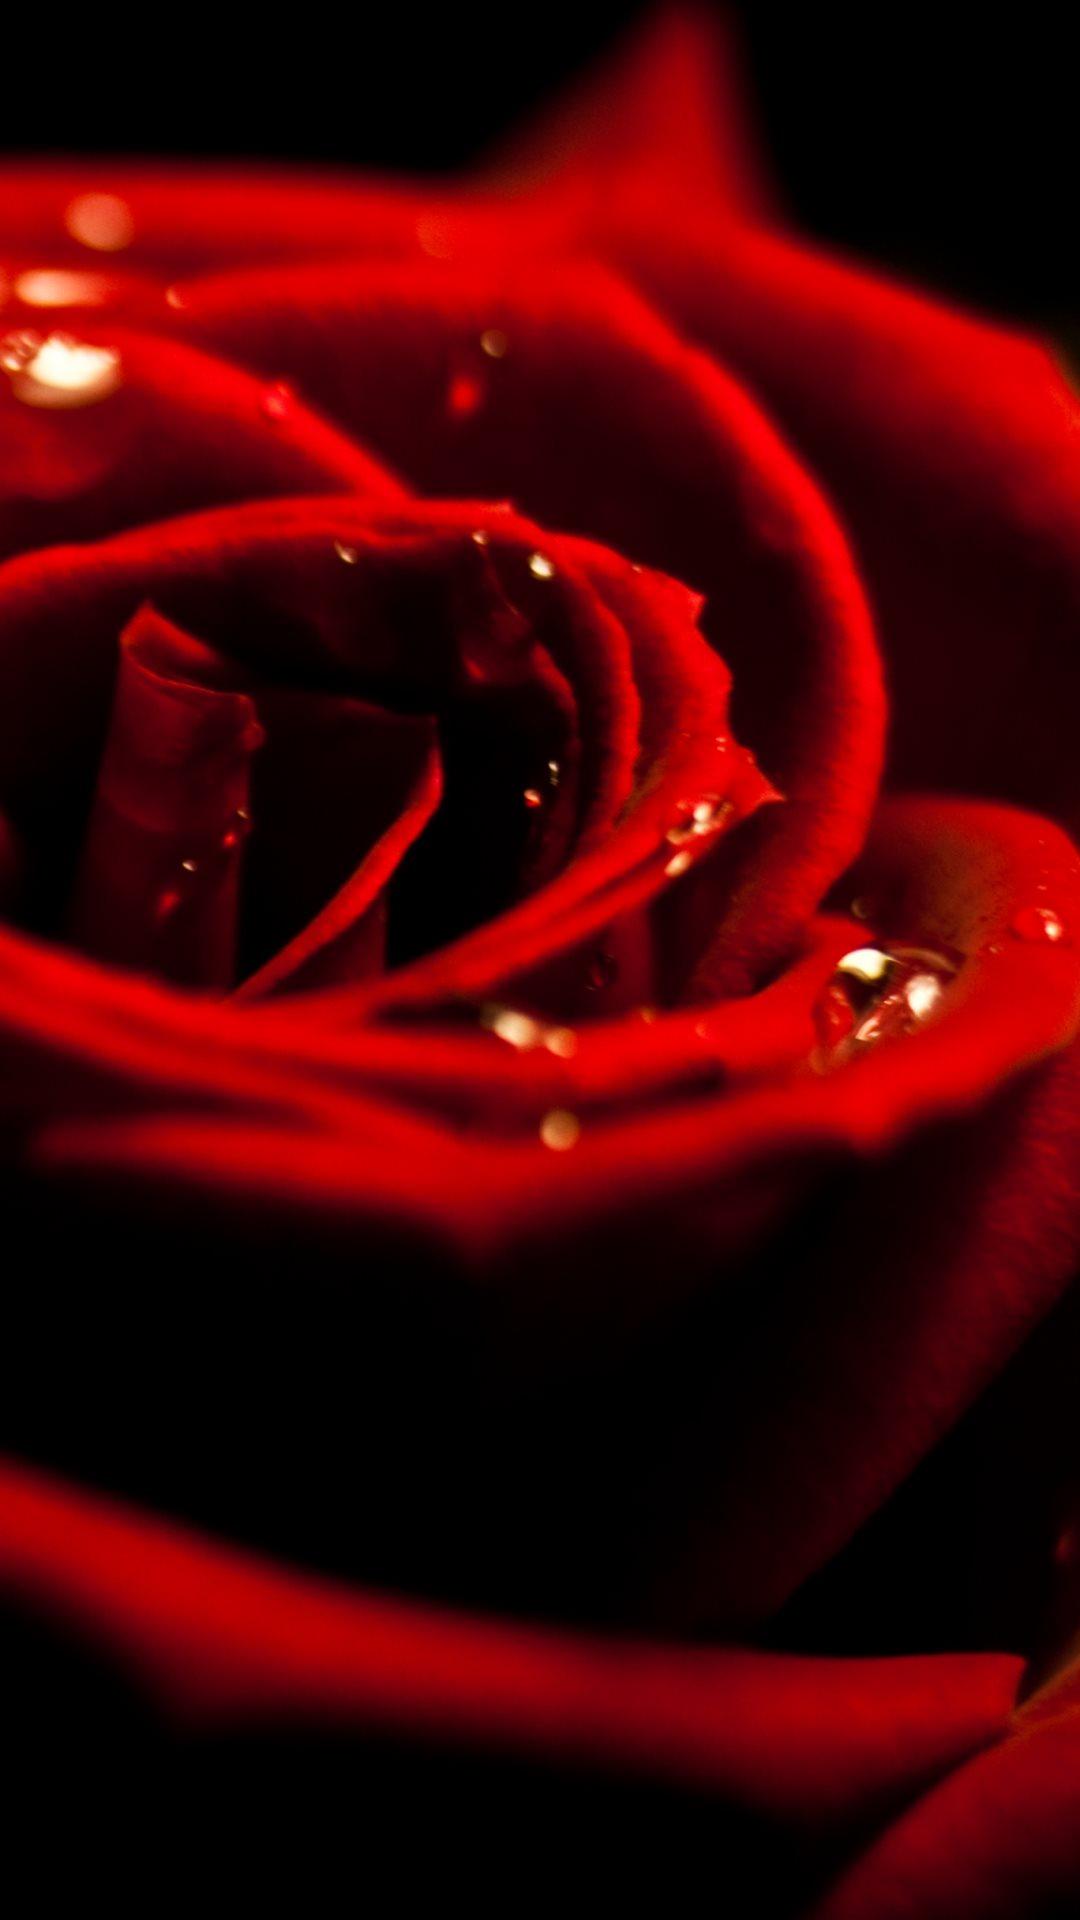 Red Rose Dew Closeup iPhone 8 Wallpaper Free Download